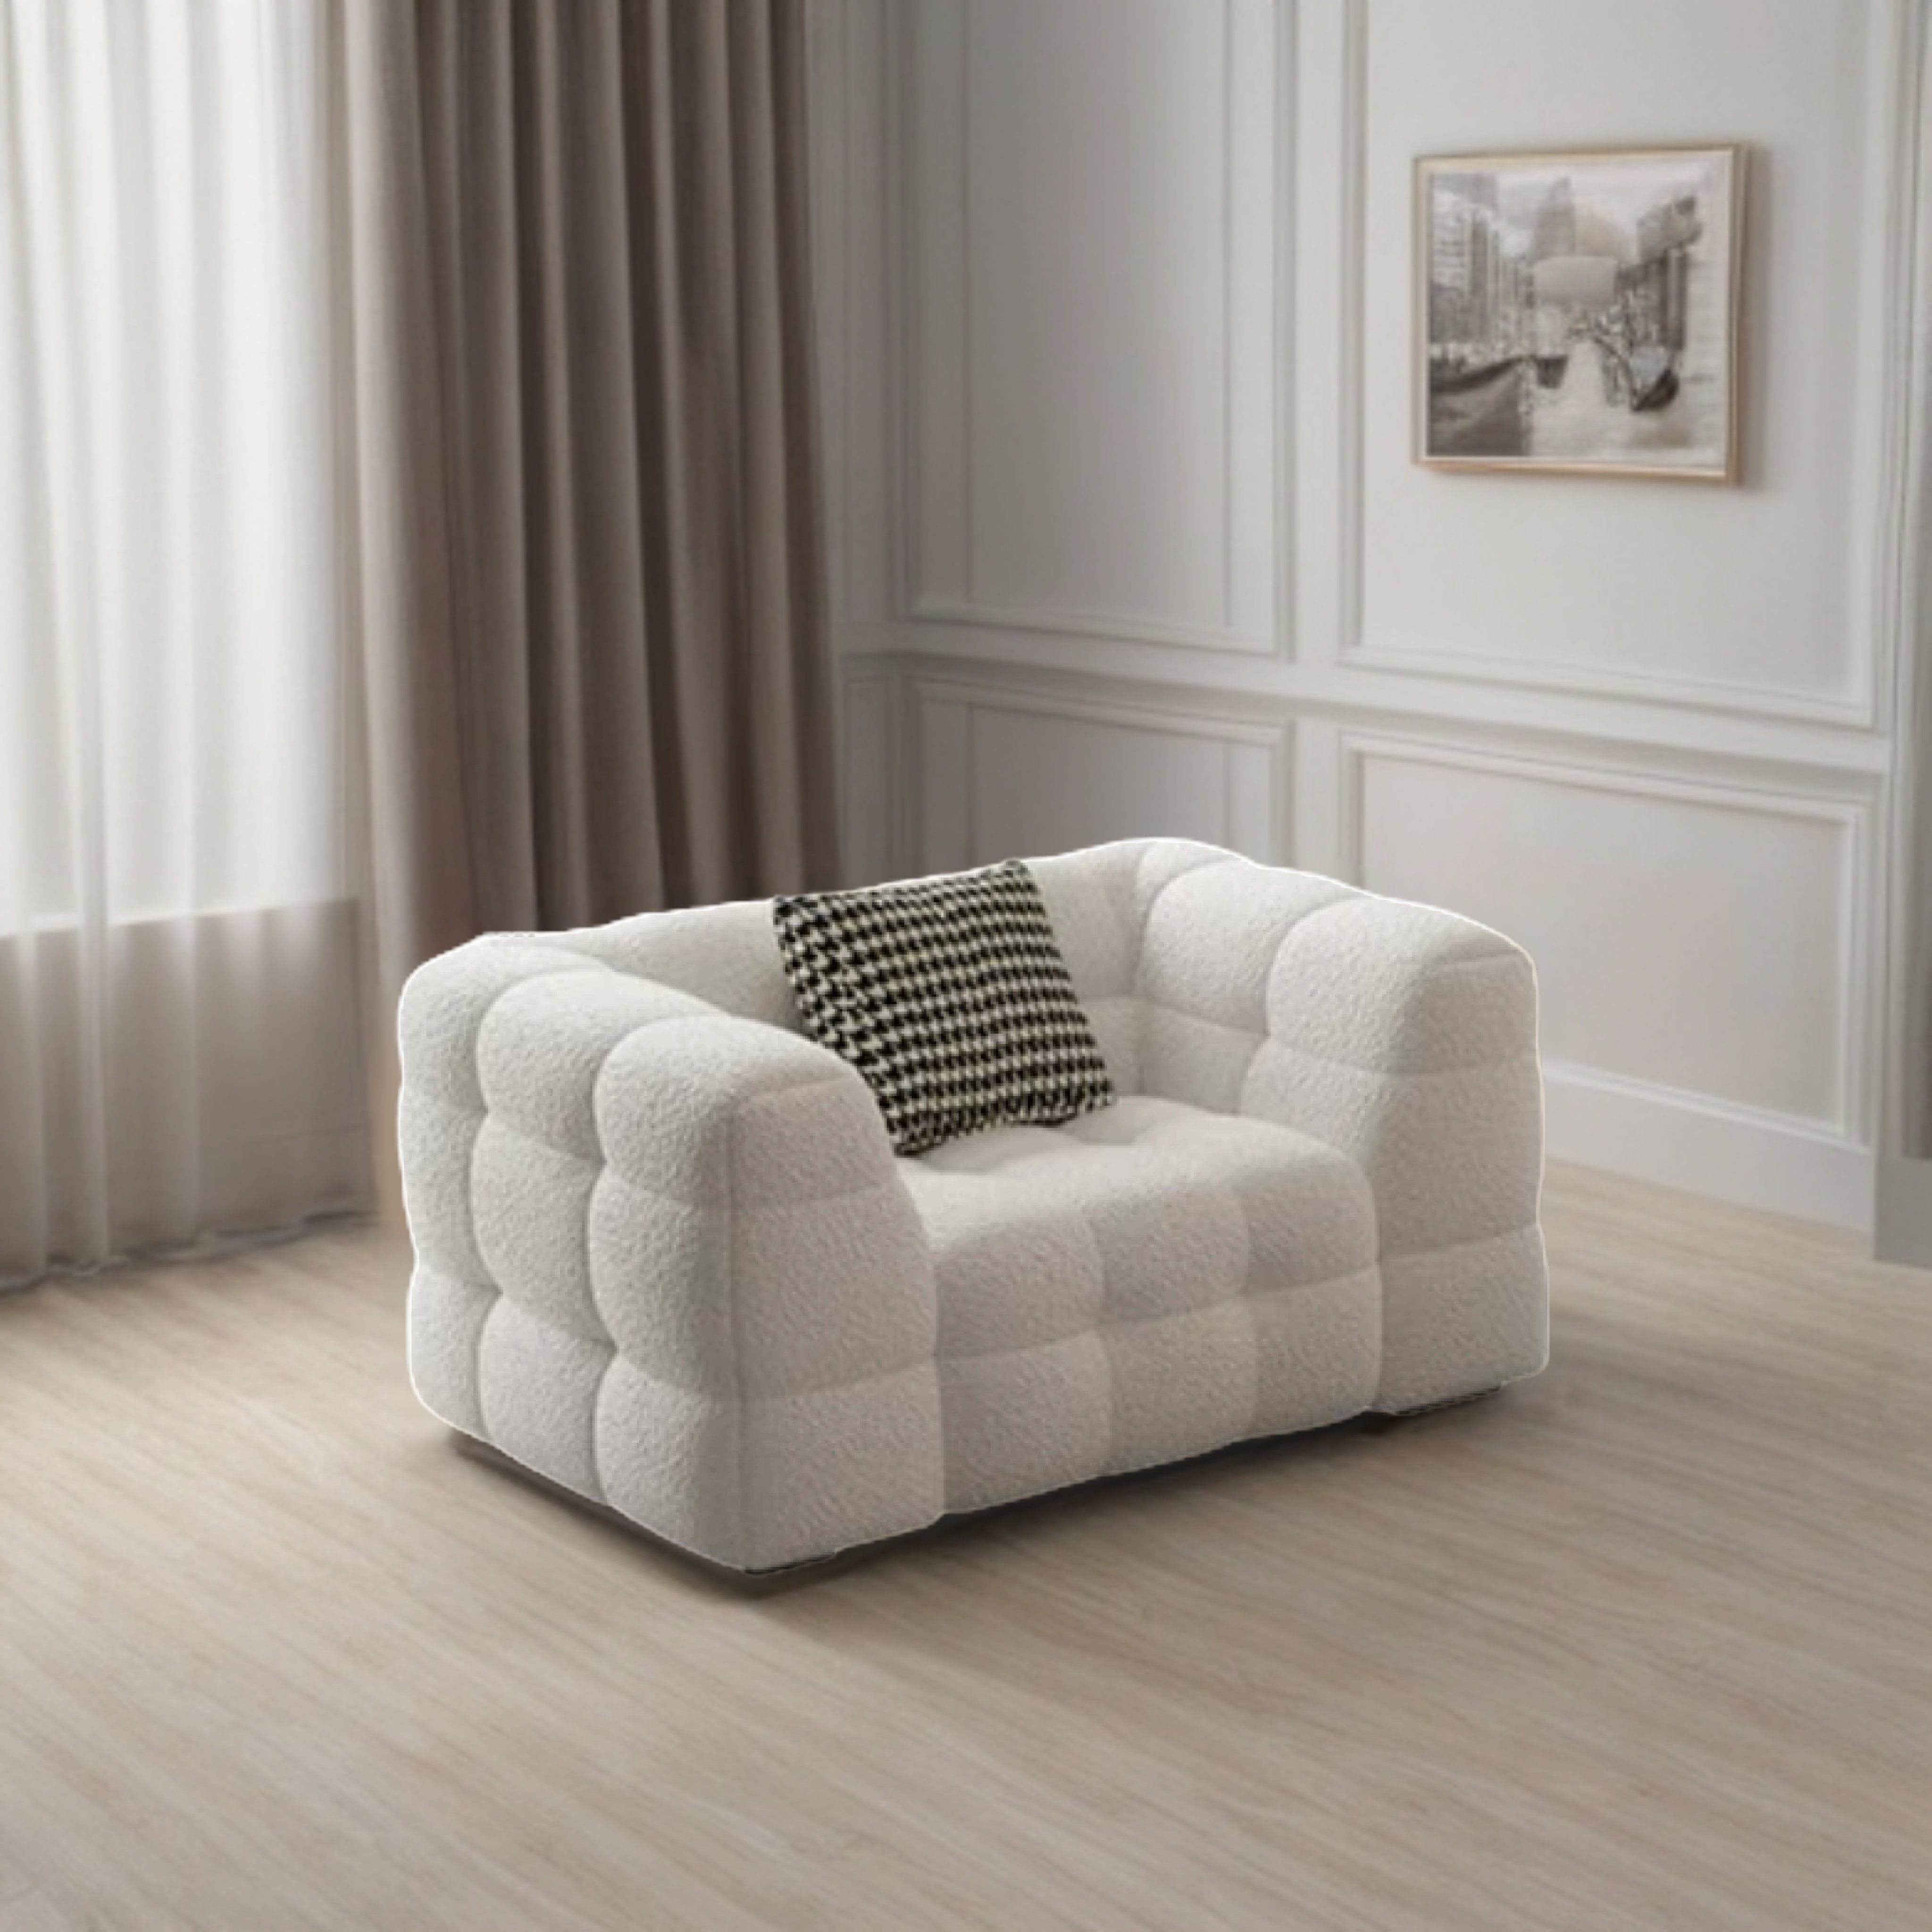 Cream Fabric Sofa - Cotton Candy Style Living Room